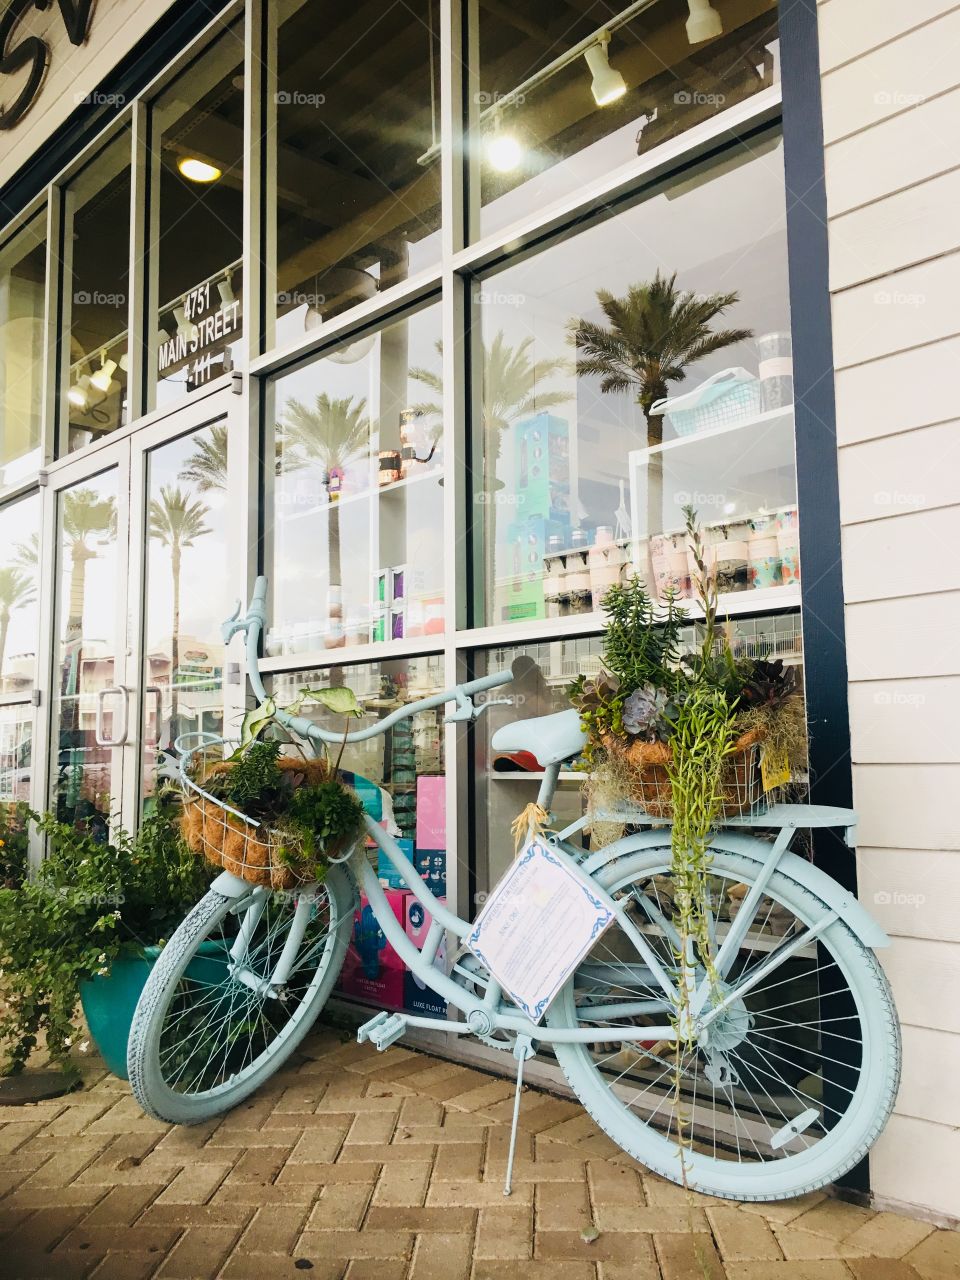 Vintage bike on display, sitting outside a shop in Orange Beach, Alabama, USA